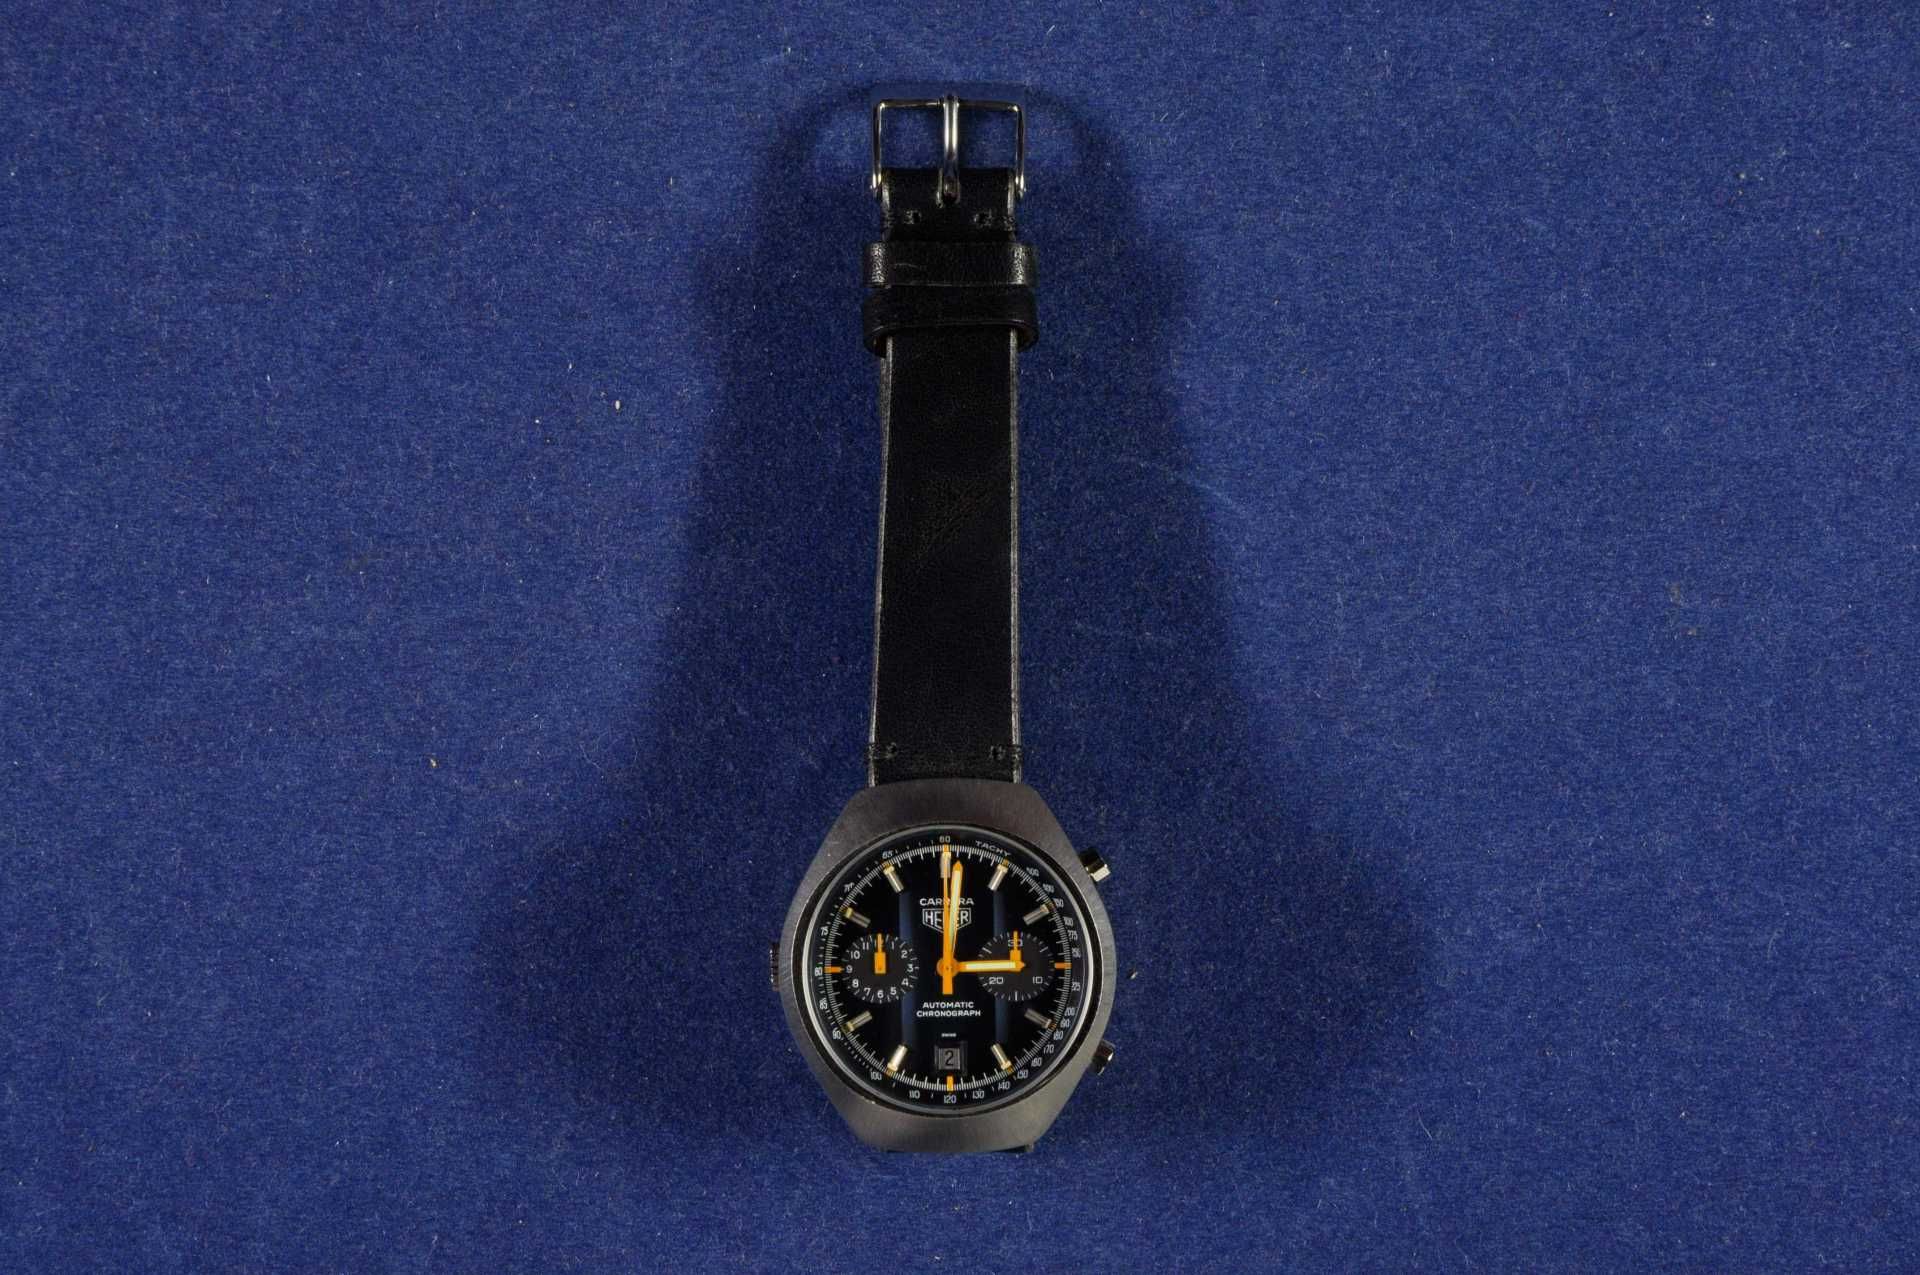 Herren Armband Uhr \Carrera Heuer\ Chronograph. Ca. 38mm, um 1975, Edelstahlgehäuse Nr. 110573,  Ank - Bild 2 aus 6